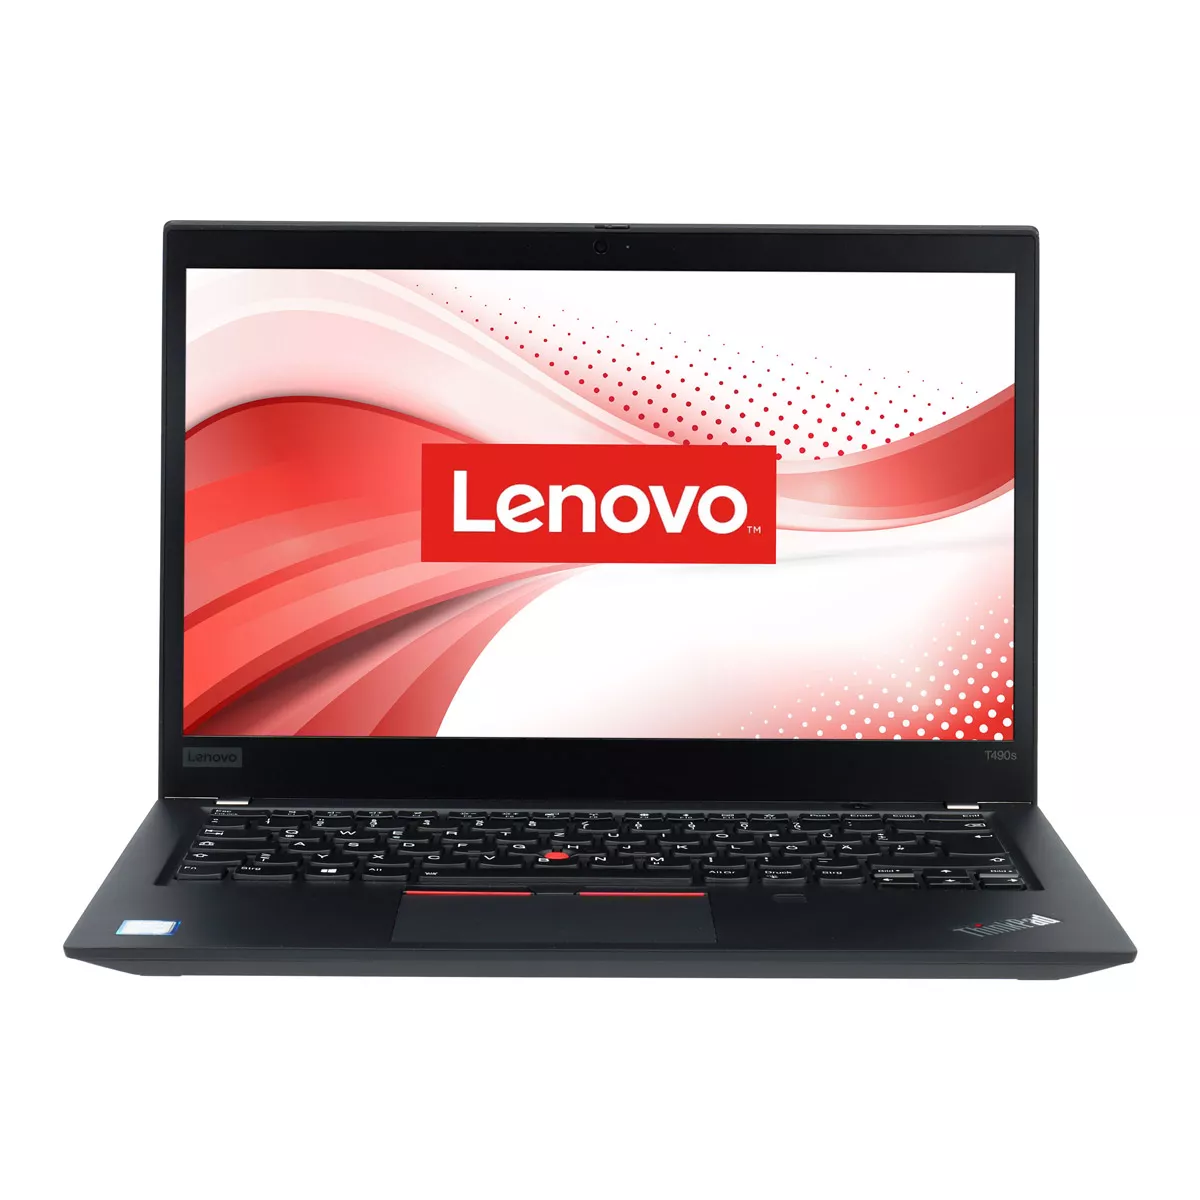 Lenovo ThinkPad T495 AMD Ryzen 7 Pro 3700U Full-HD Touch 500 GB M.2 nVME SSD Webcam A